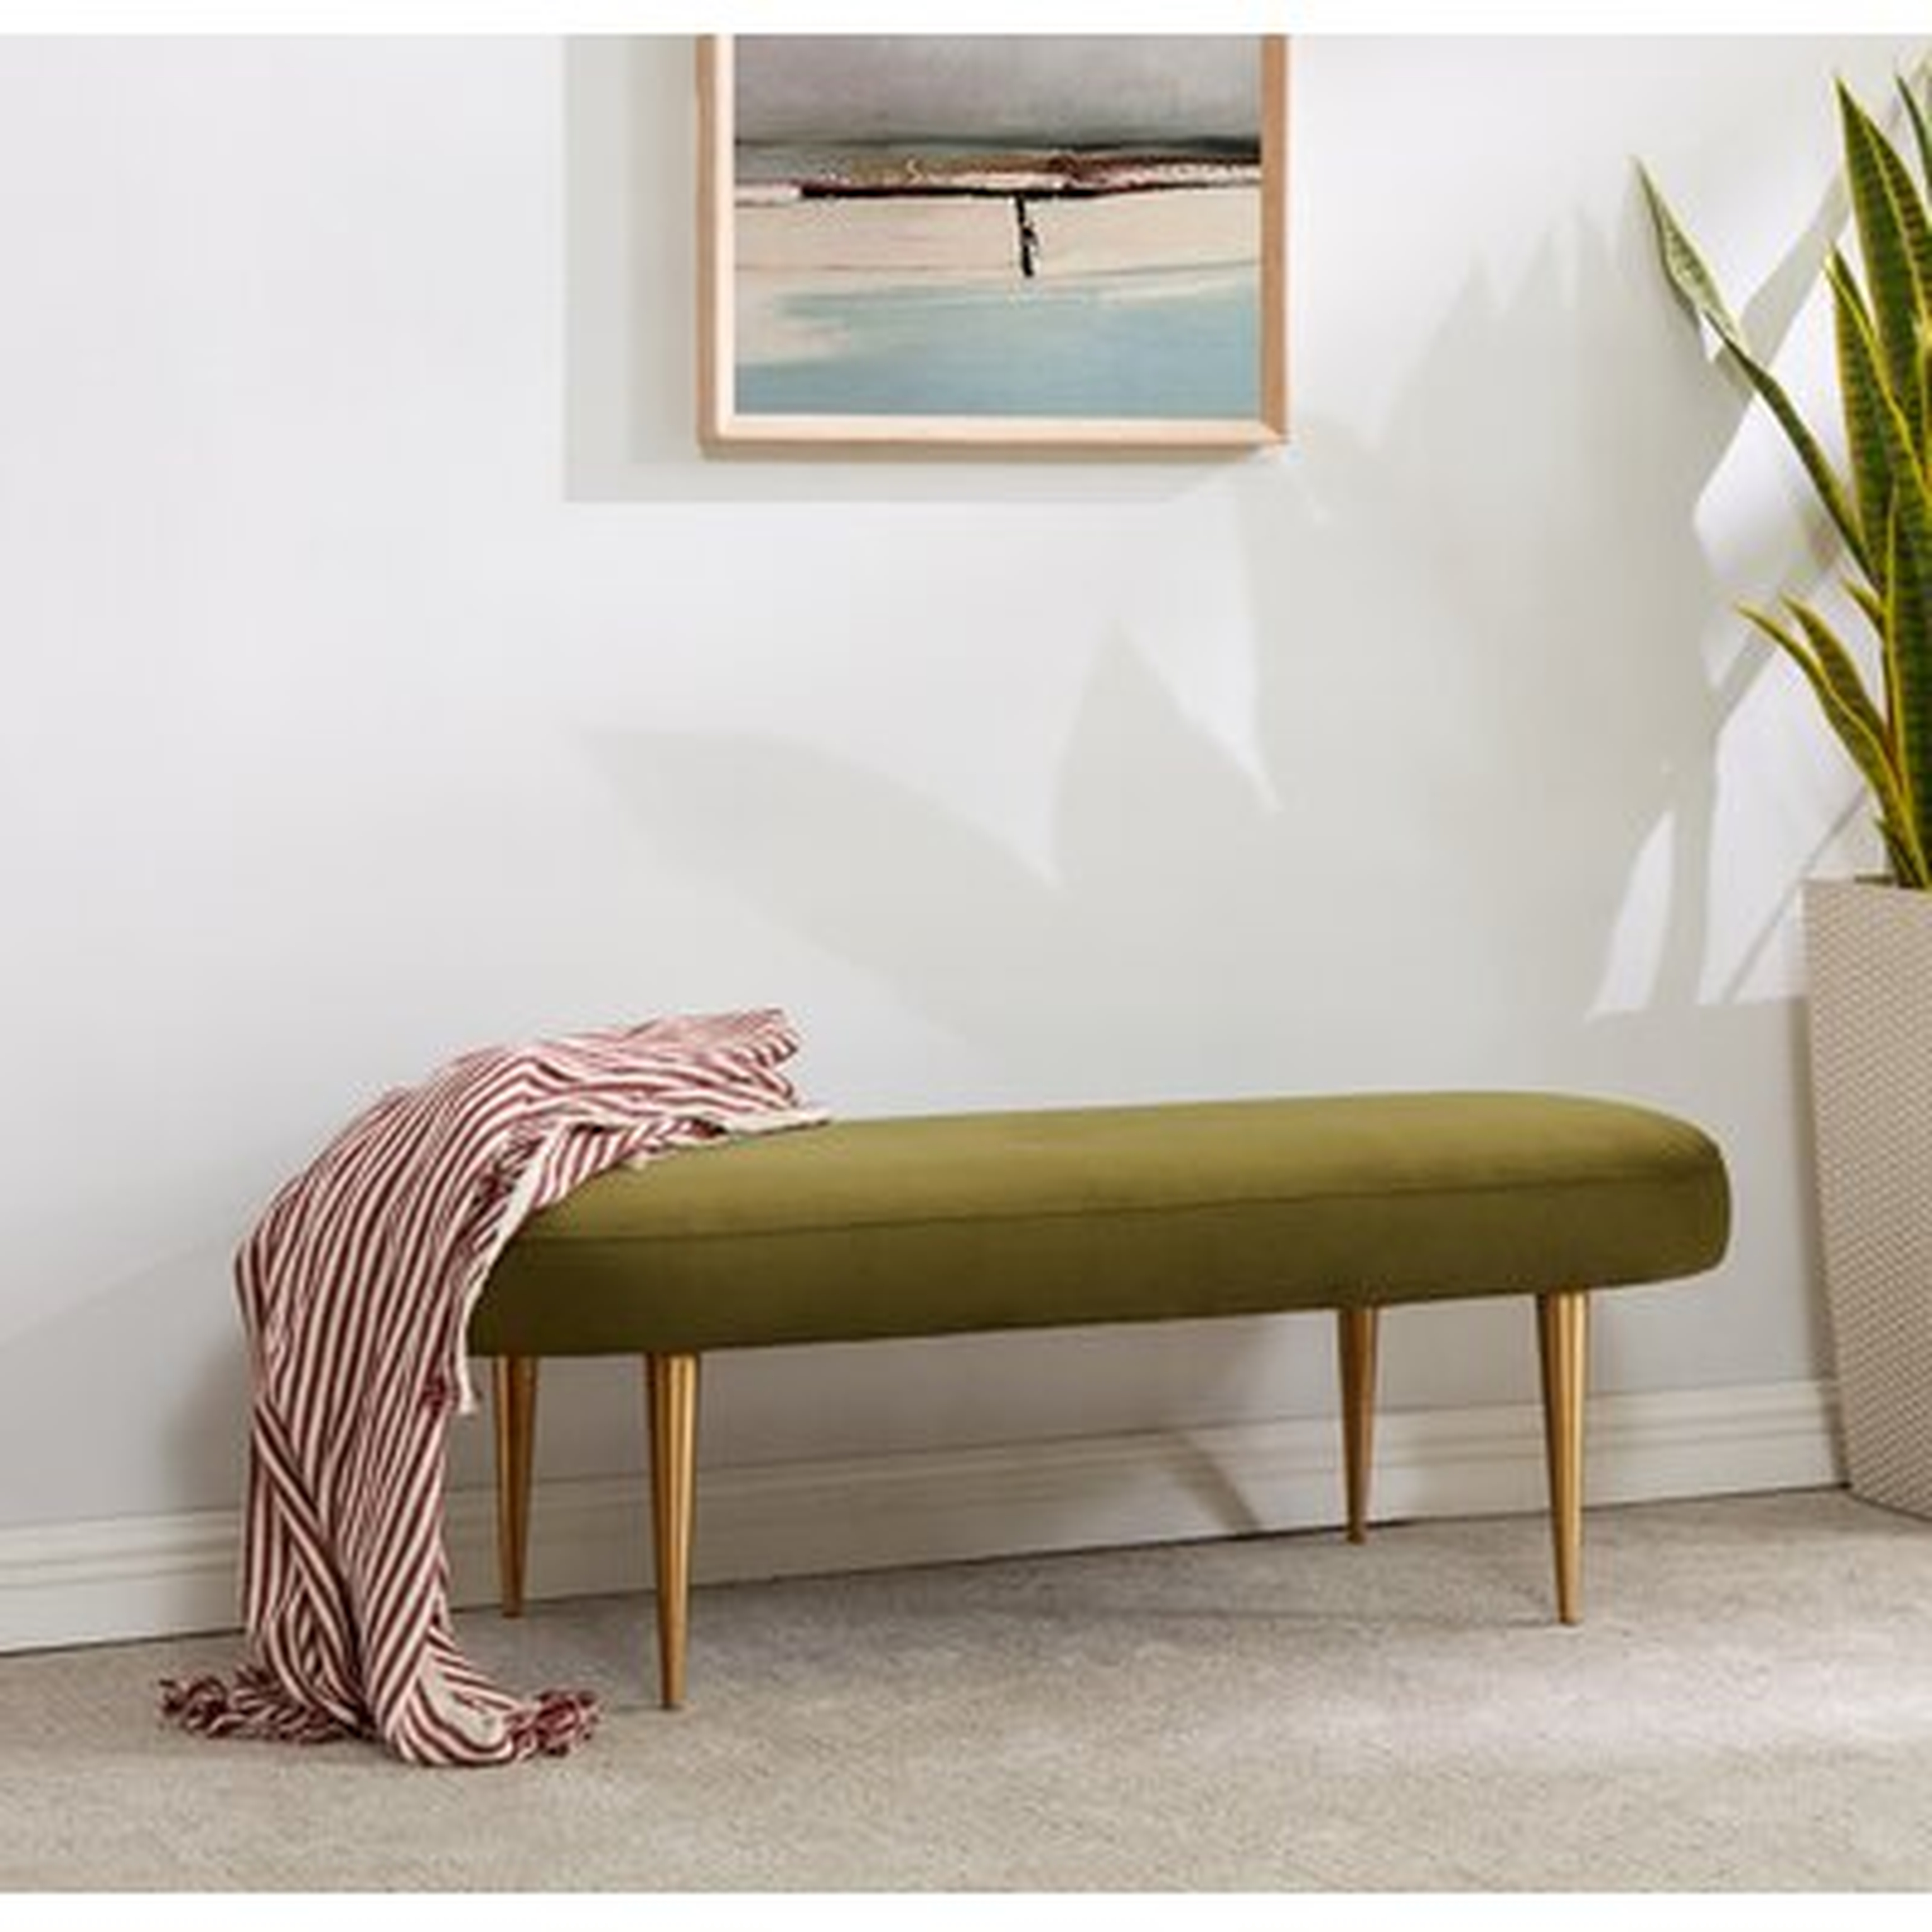 Skye Upholstered Bench - Wayfair